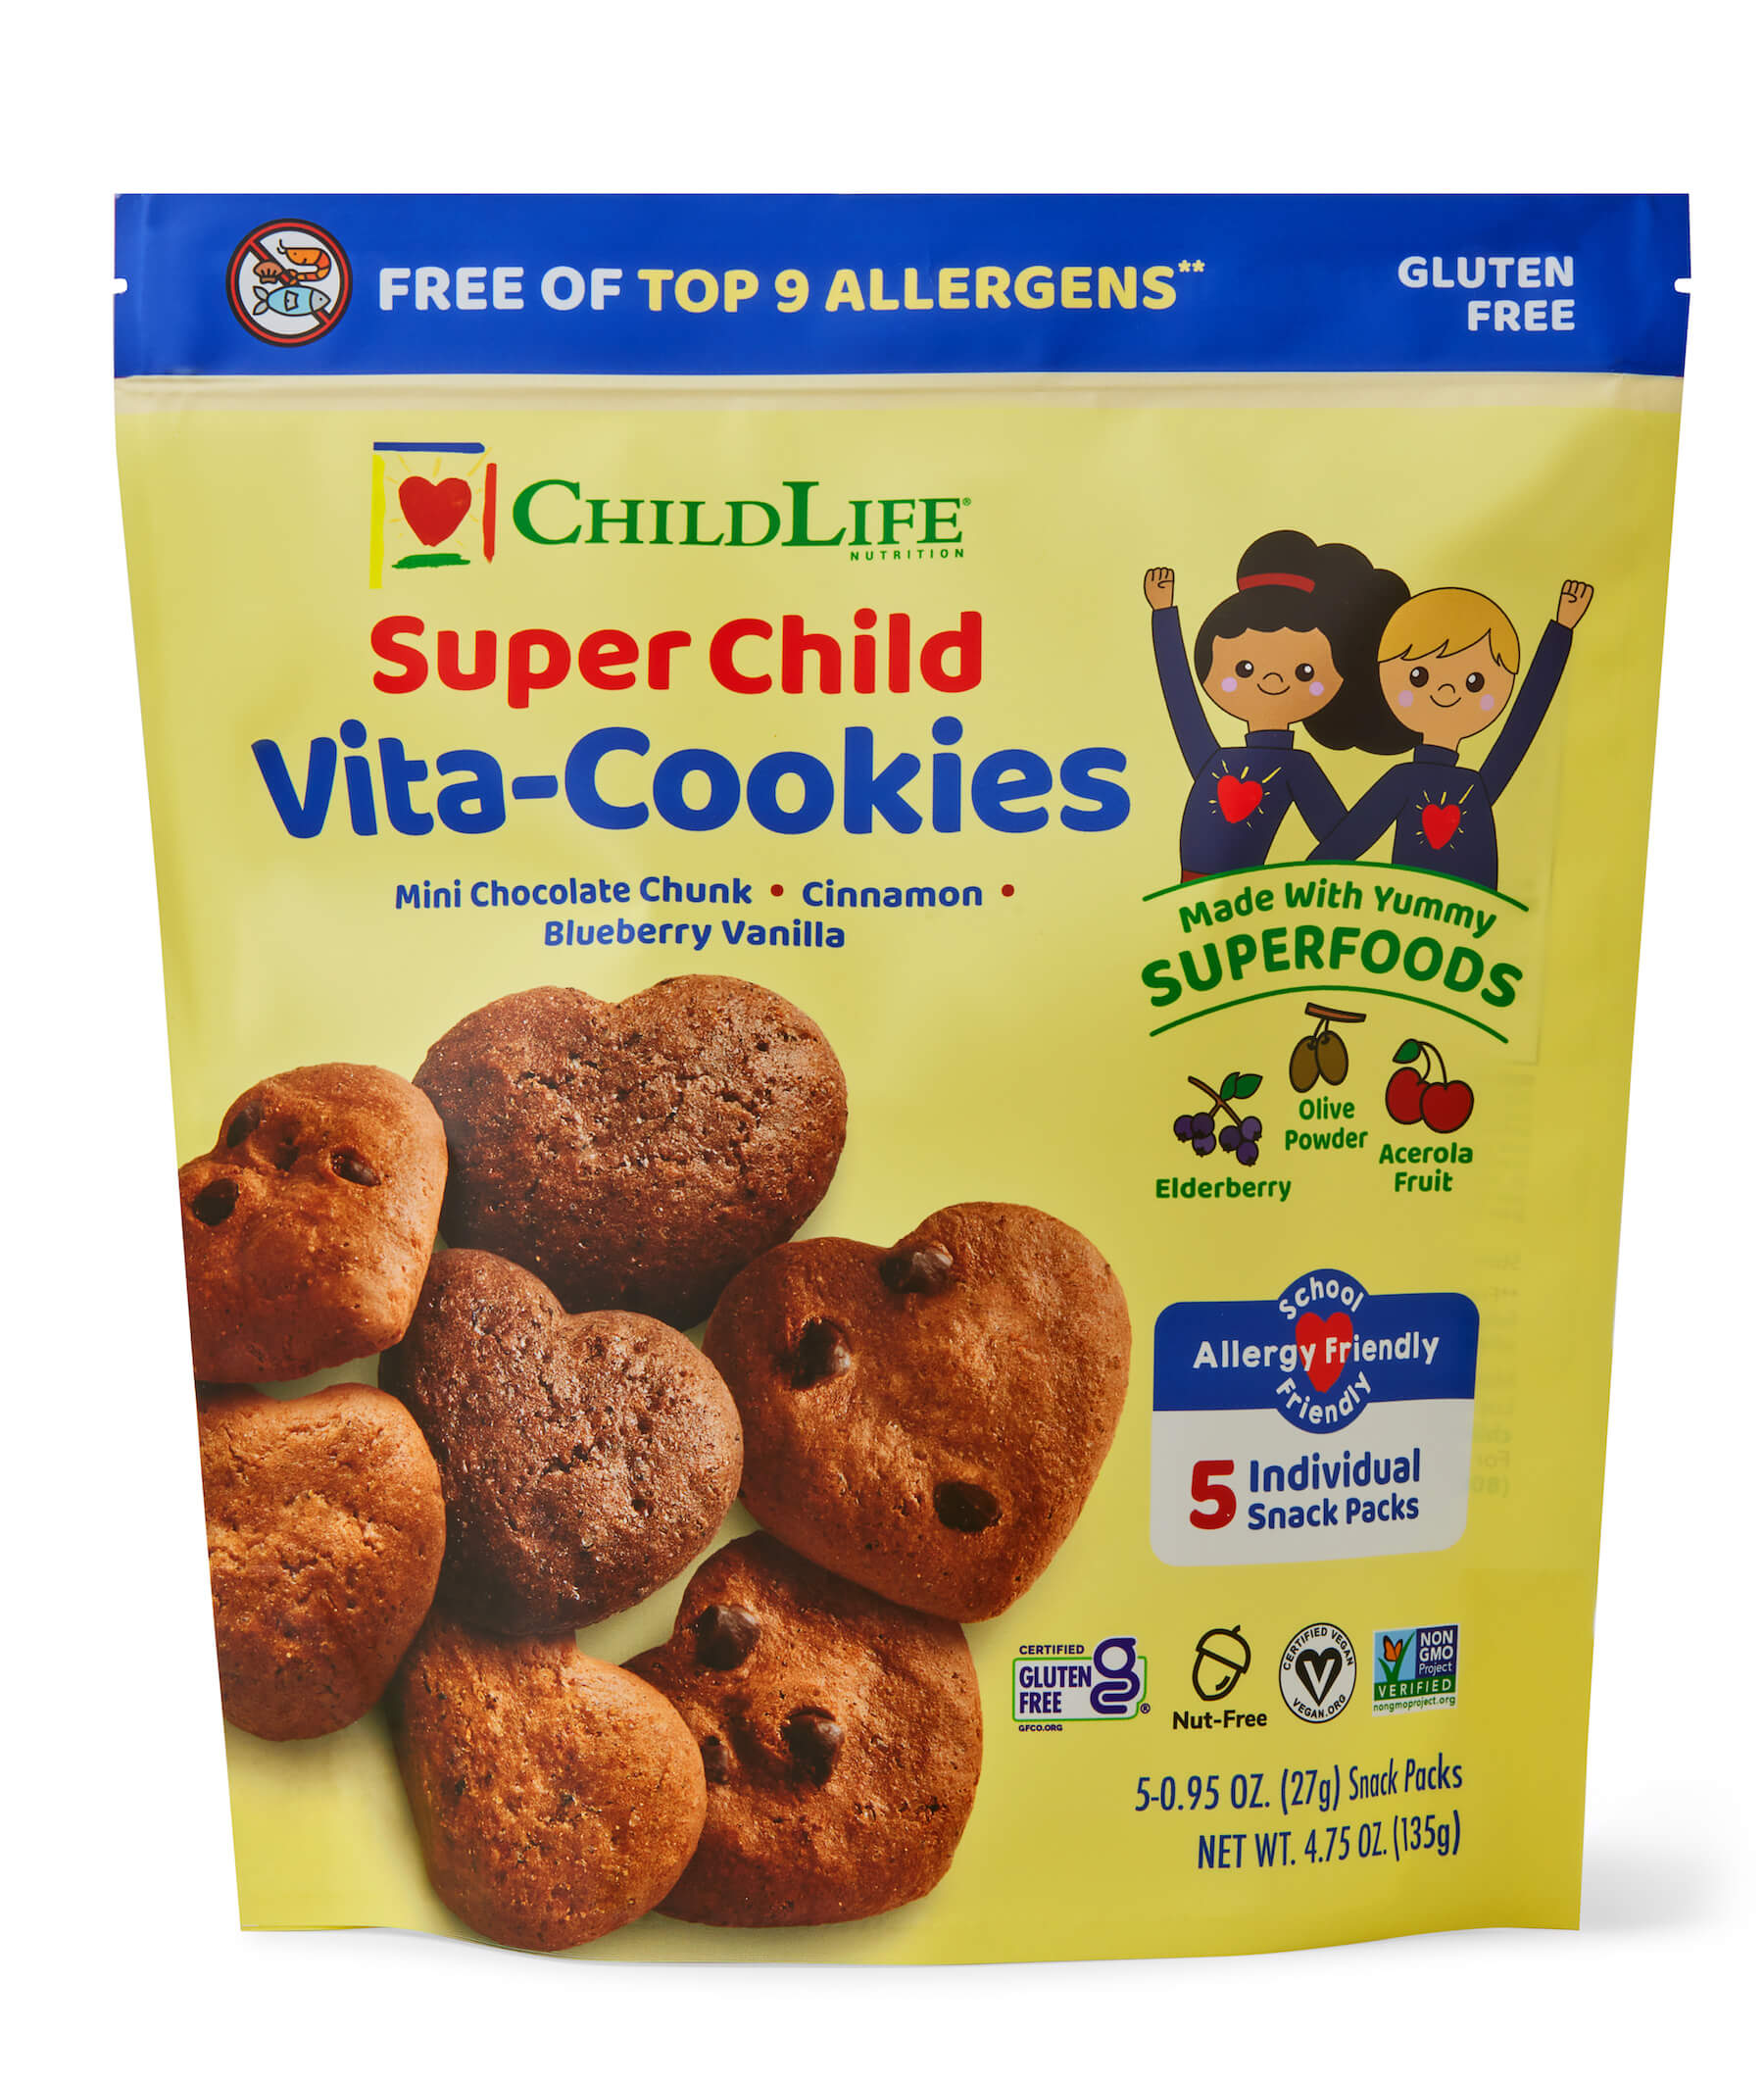 childlife essentials super child vita cookies packaging cookies with vitamins for kids